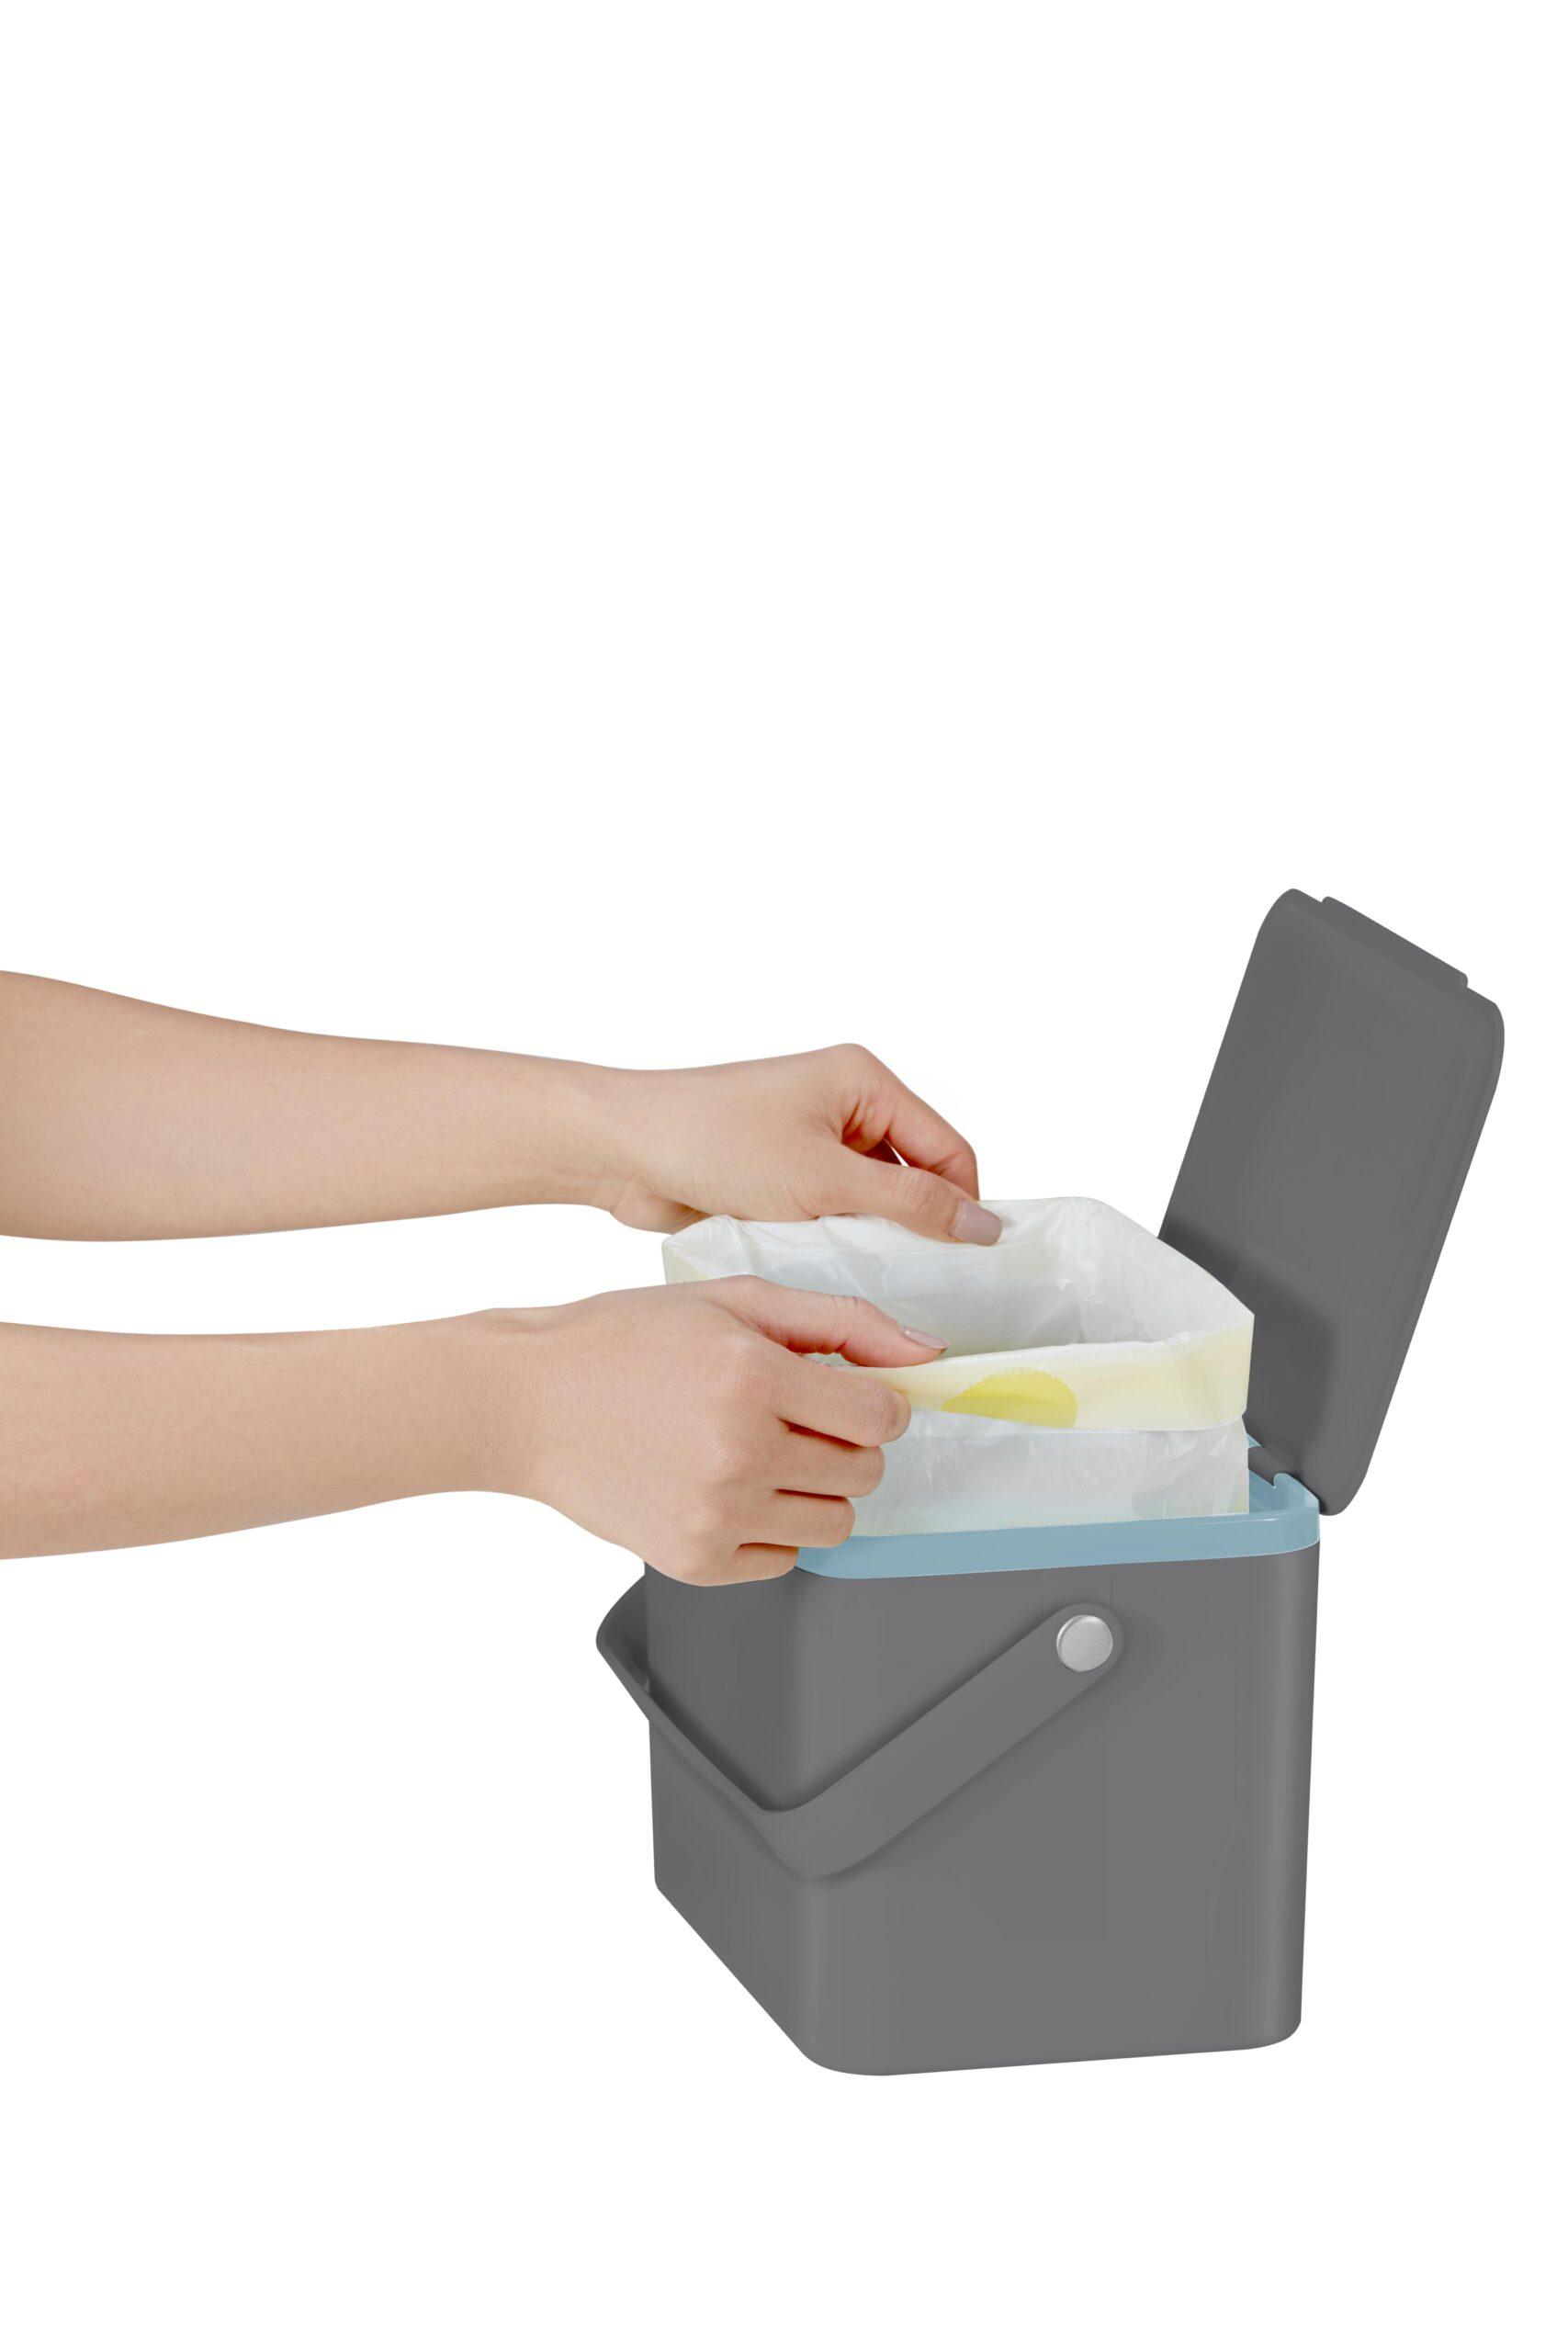 Eko Deco Food Waste Caddy Countertop Bin For Compostable Waste Grey 4 Litre